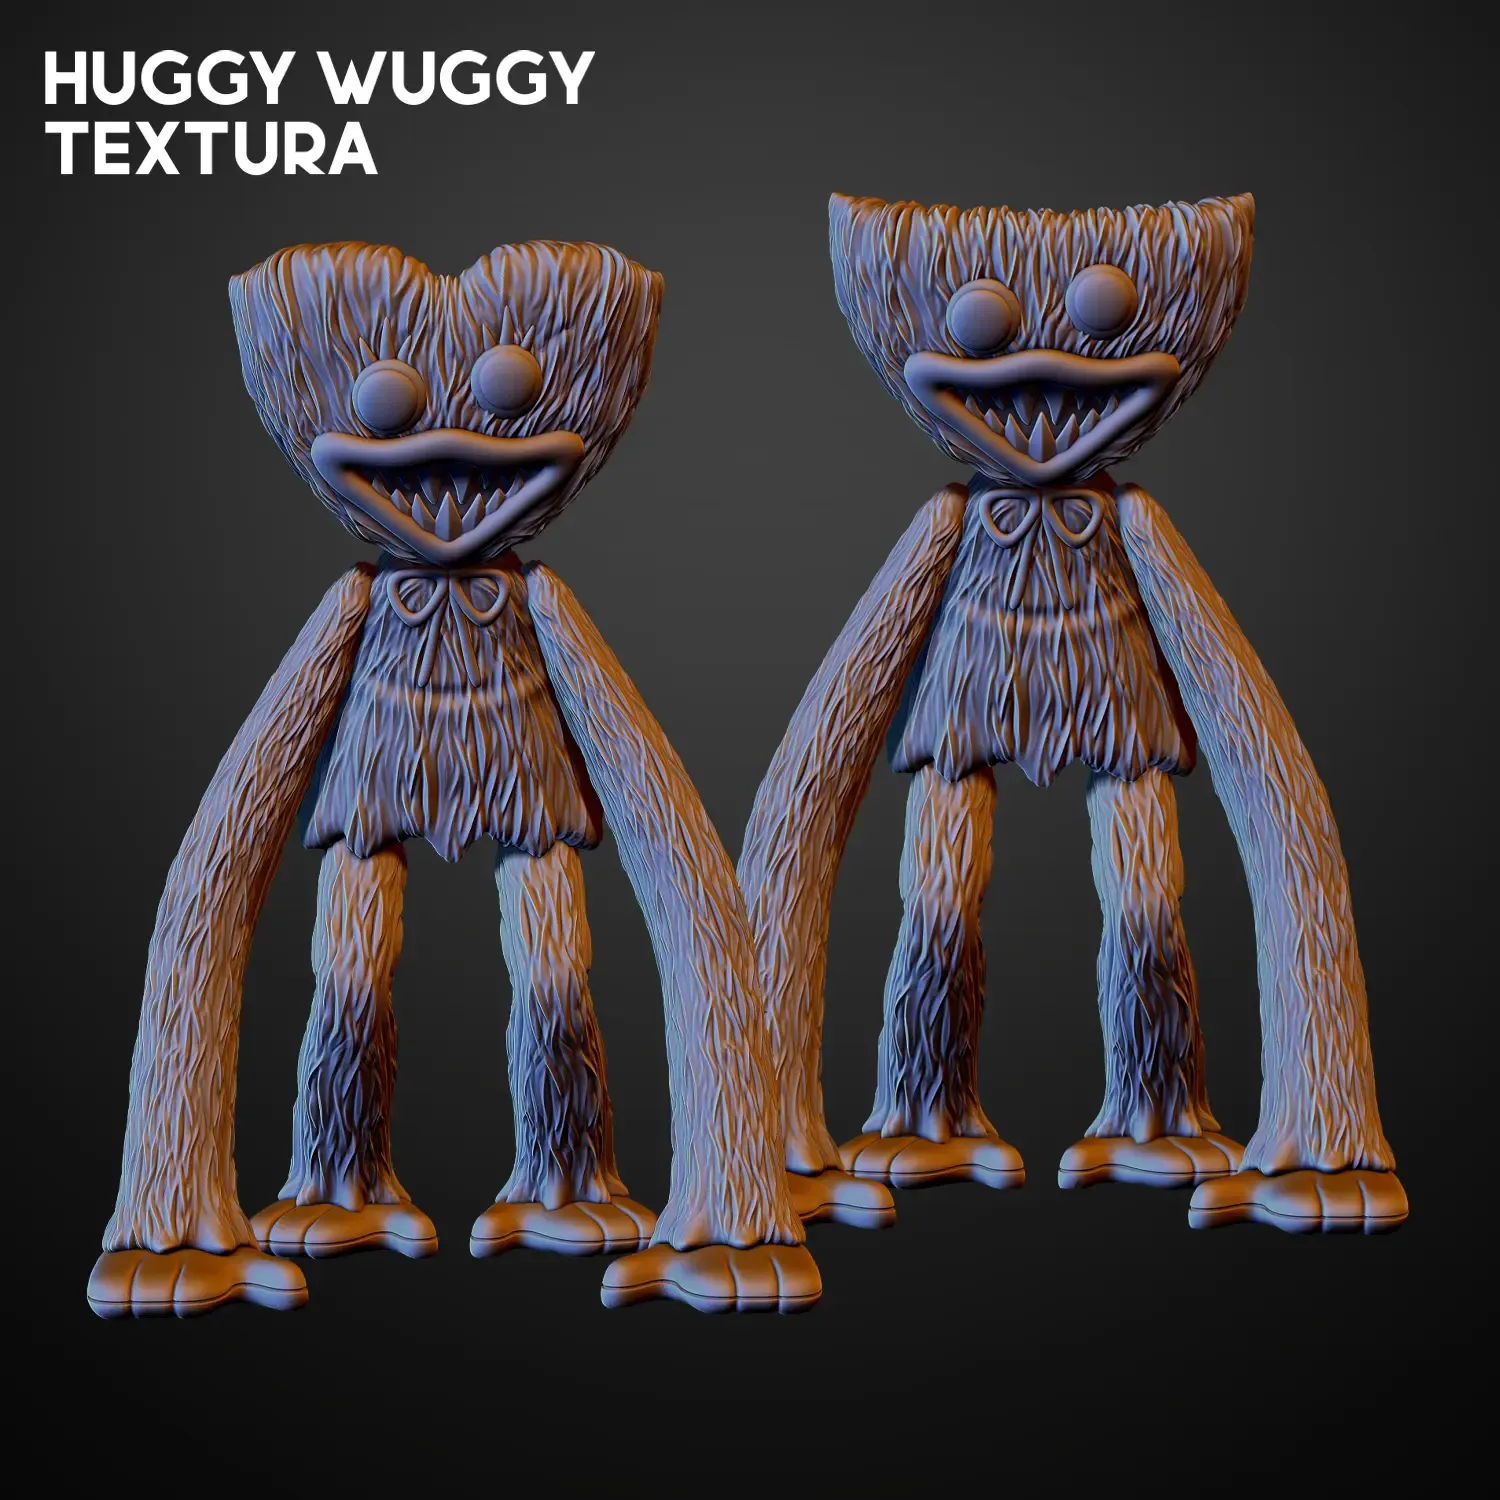 Huggy Wuggy and Kissy Missy